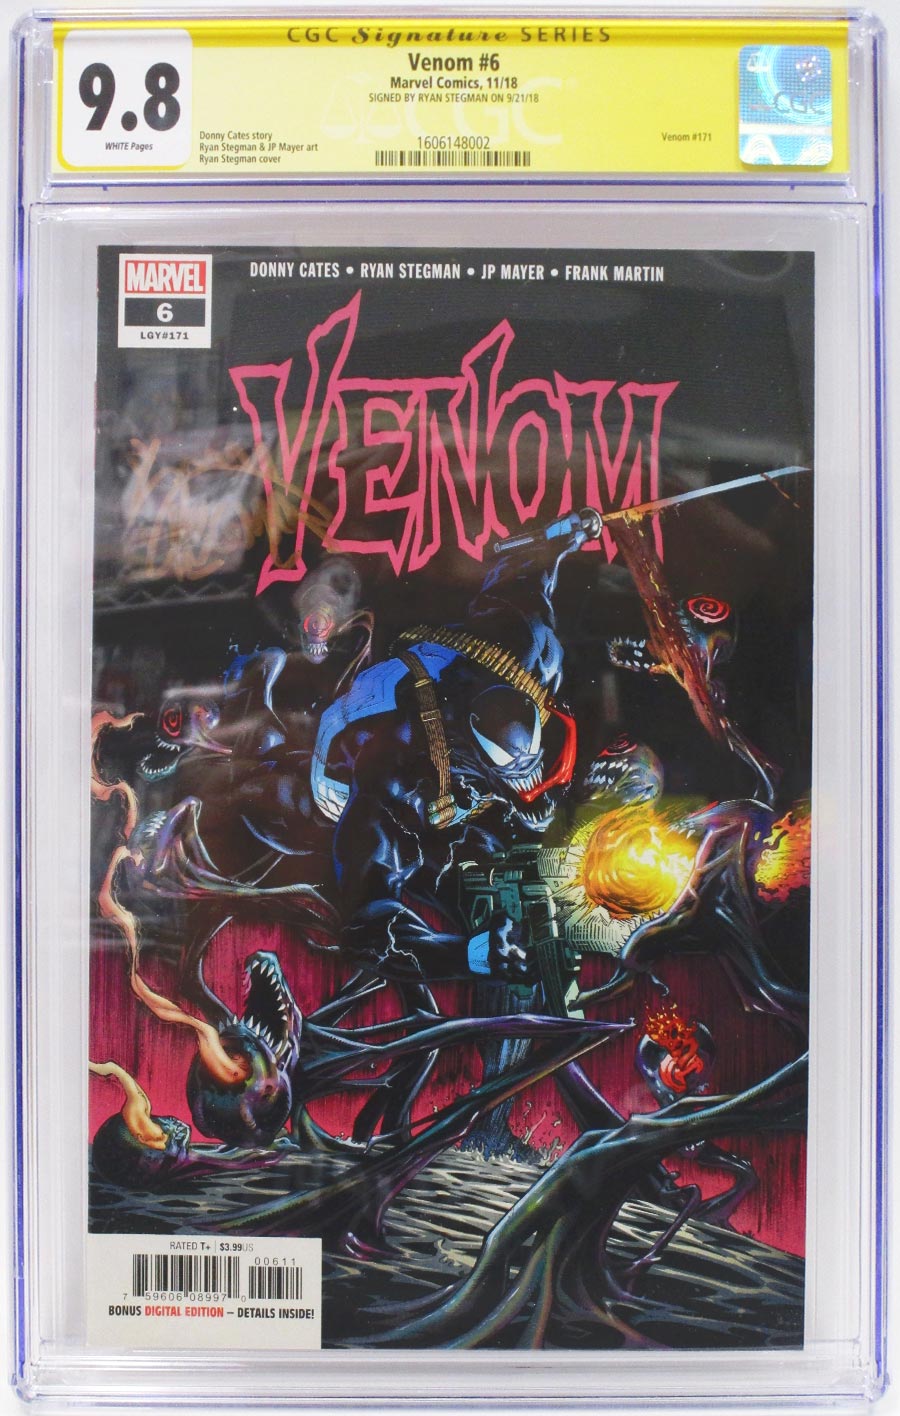 Venom Vol 4 #6 Cover D 1st Ptg Regular Ryan Stegman Cover CGC Signature Series 9.8 Signed By Ryan Stegman